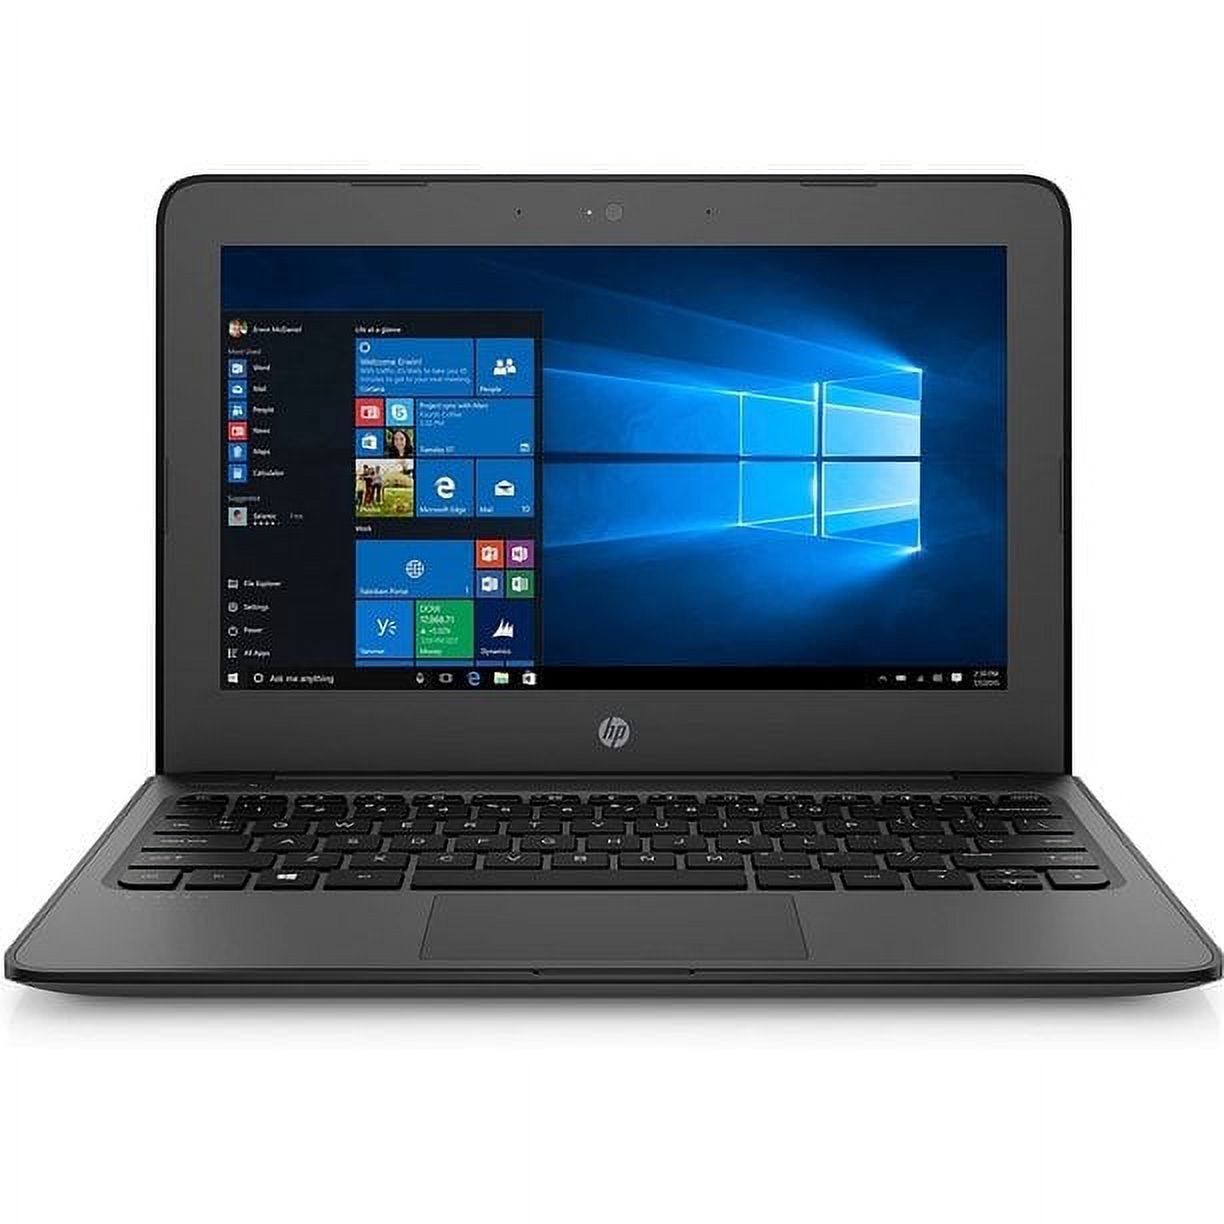 Pre-Owned HP Stream 11 Pro G2 11.6" Laptop Intel N3050 1.60GHz 4GB 64GB eMMC SSD Windows 10 Pro (Refurbished: Good) - image 1 of 4